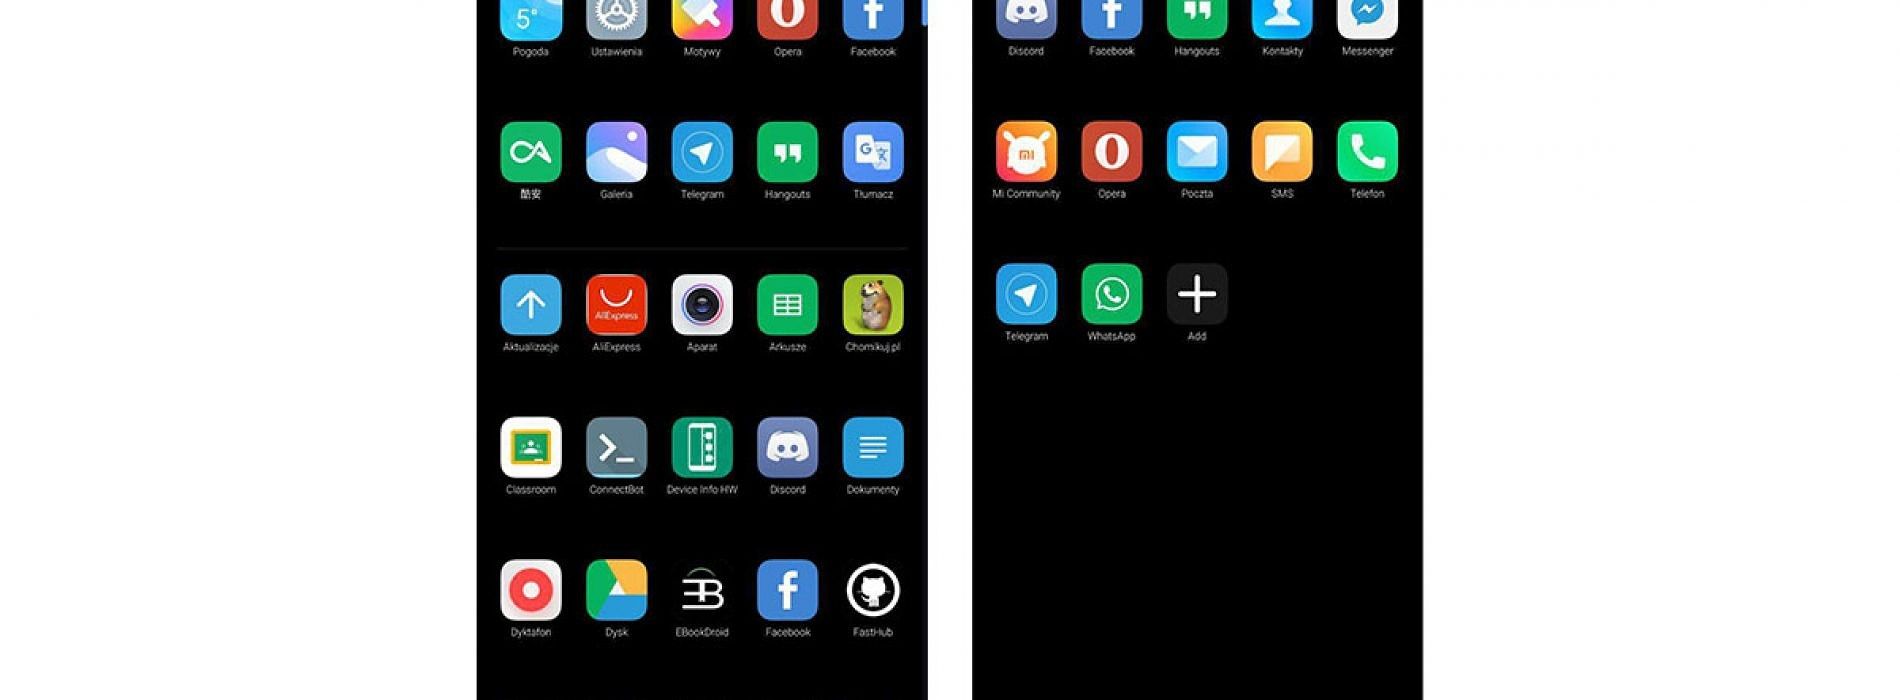 Галерея Сяоми значок. Иконки приложений ксяоми MIUI 11. Xiaomi Launcher. Галерея на смартфоне Xiaomi.